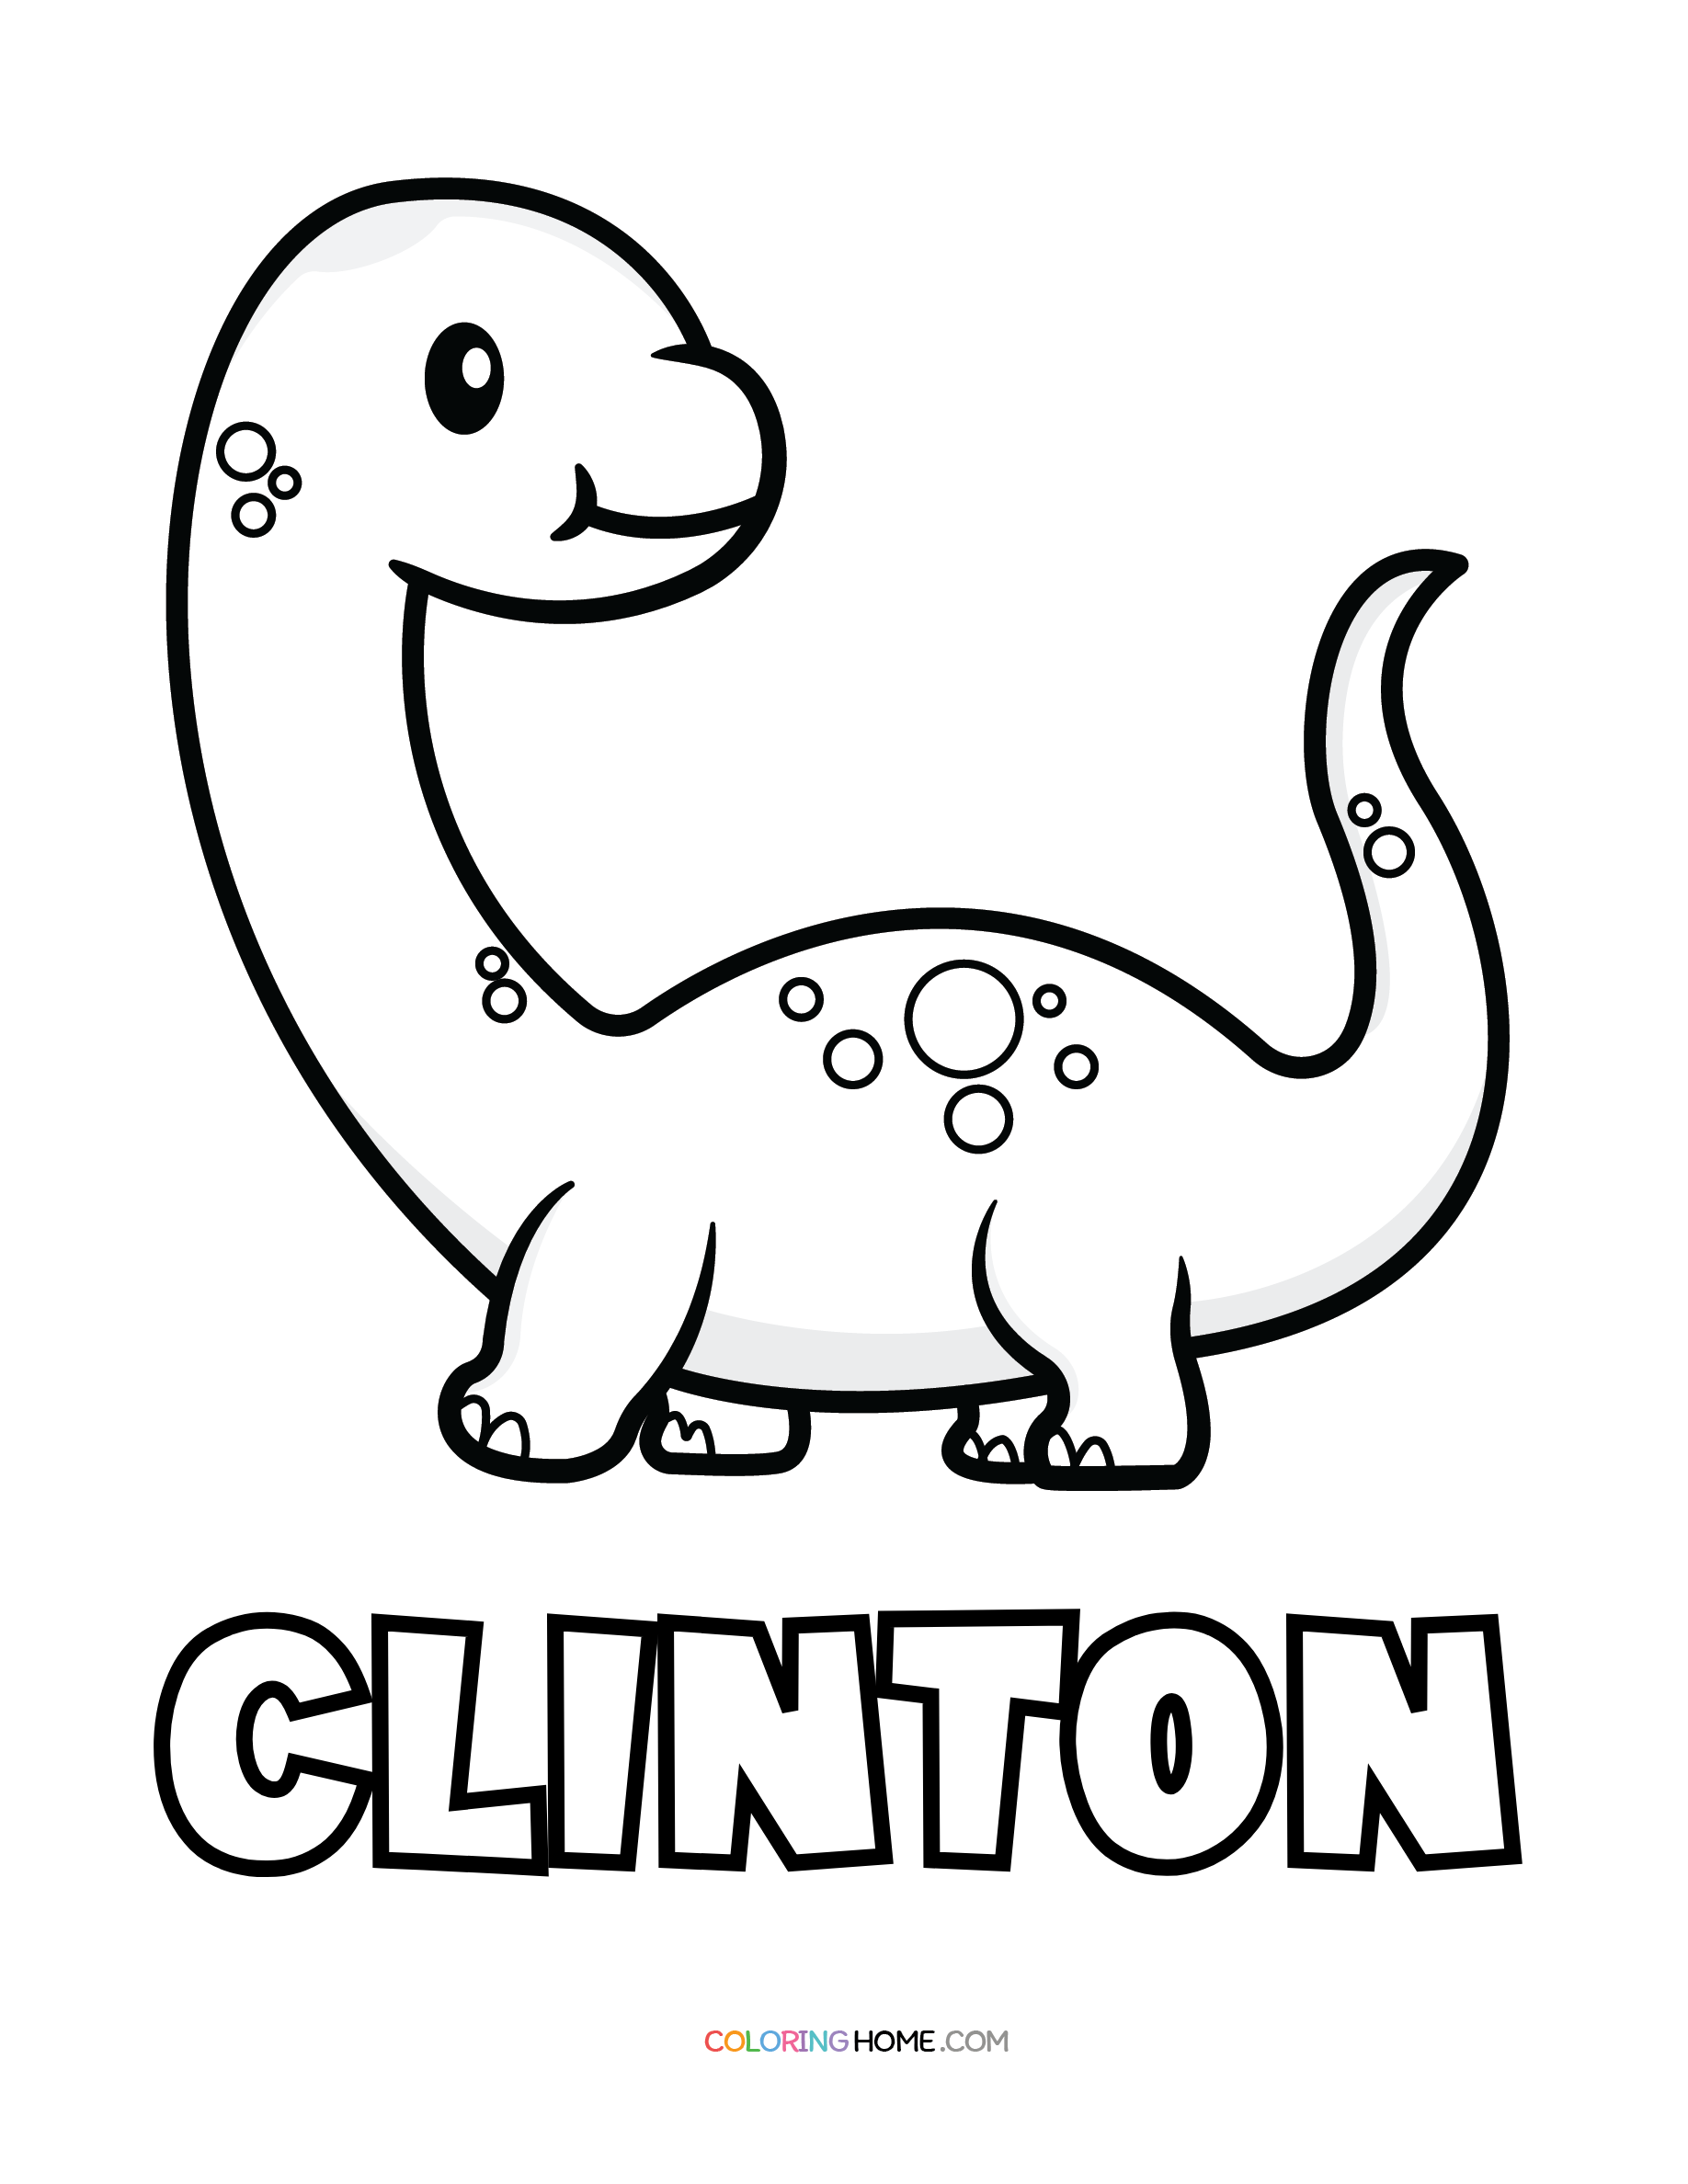 Clinton dinosaur coloring page